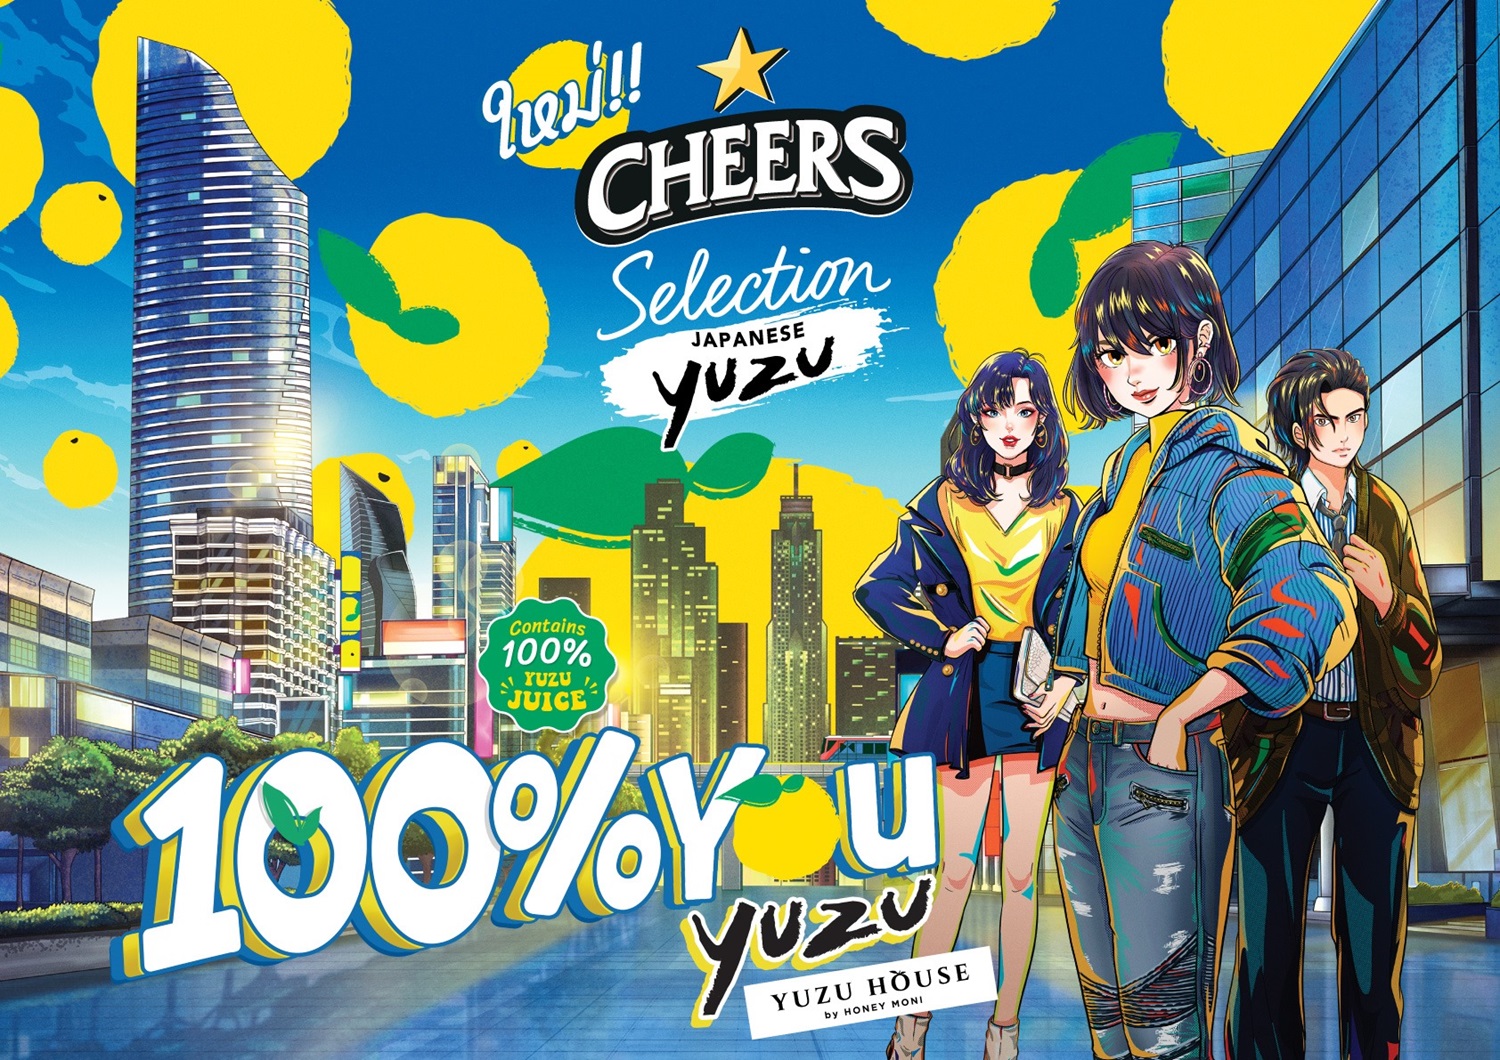 Cheers Selection x Yuzu House เปิดเบื้องหลังฤดูกาลเก็บเกี่ยว “ส้มยูซุ”  เตรียมส่งนวัตกรรมเครื่องดื่มรสชาติใหม่สู่ตลาดพรีเมียม 15 พฤศจิกายนนี้